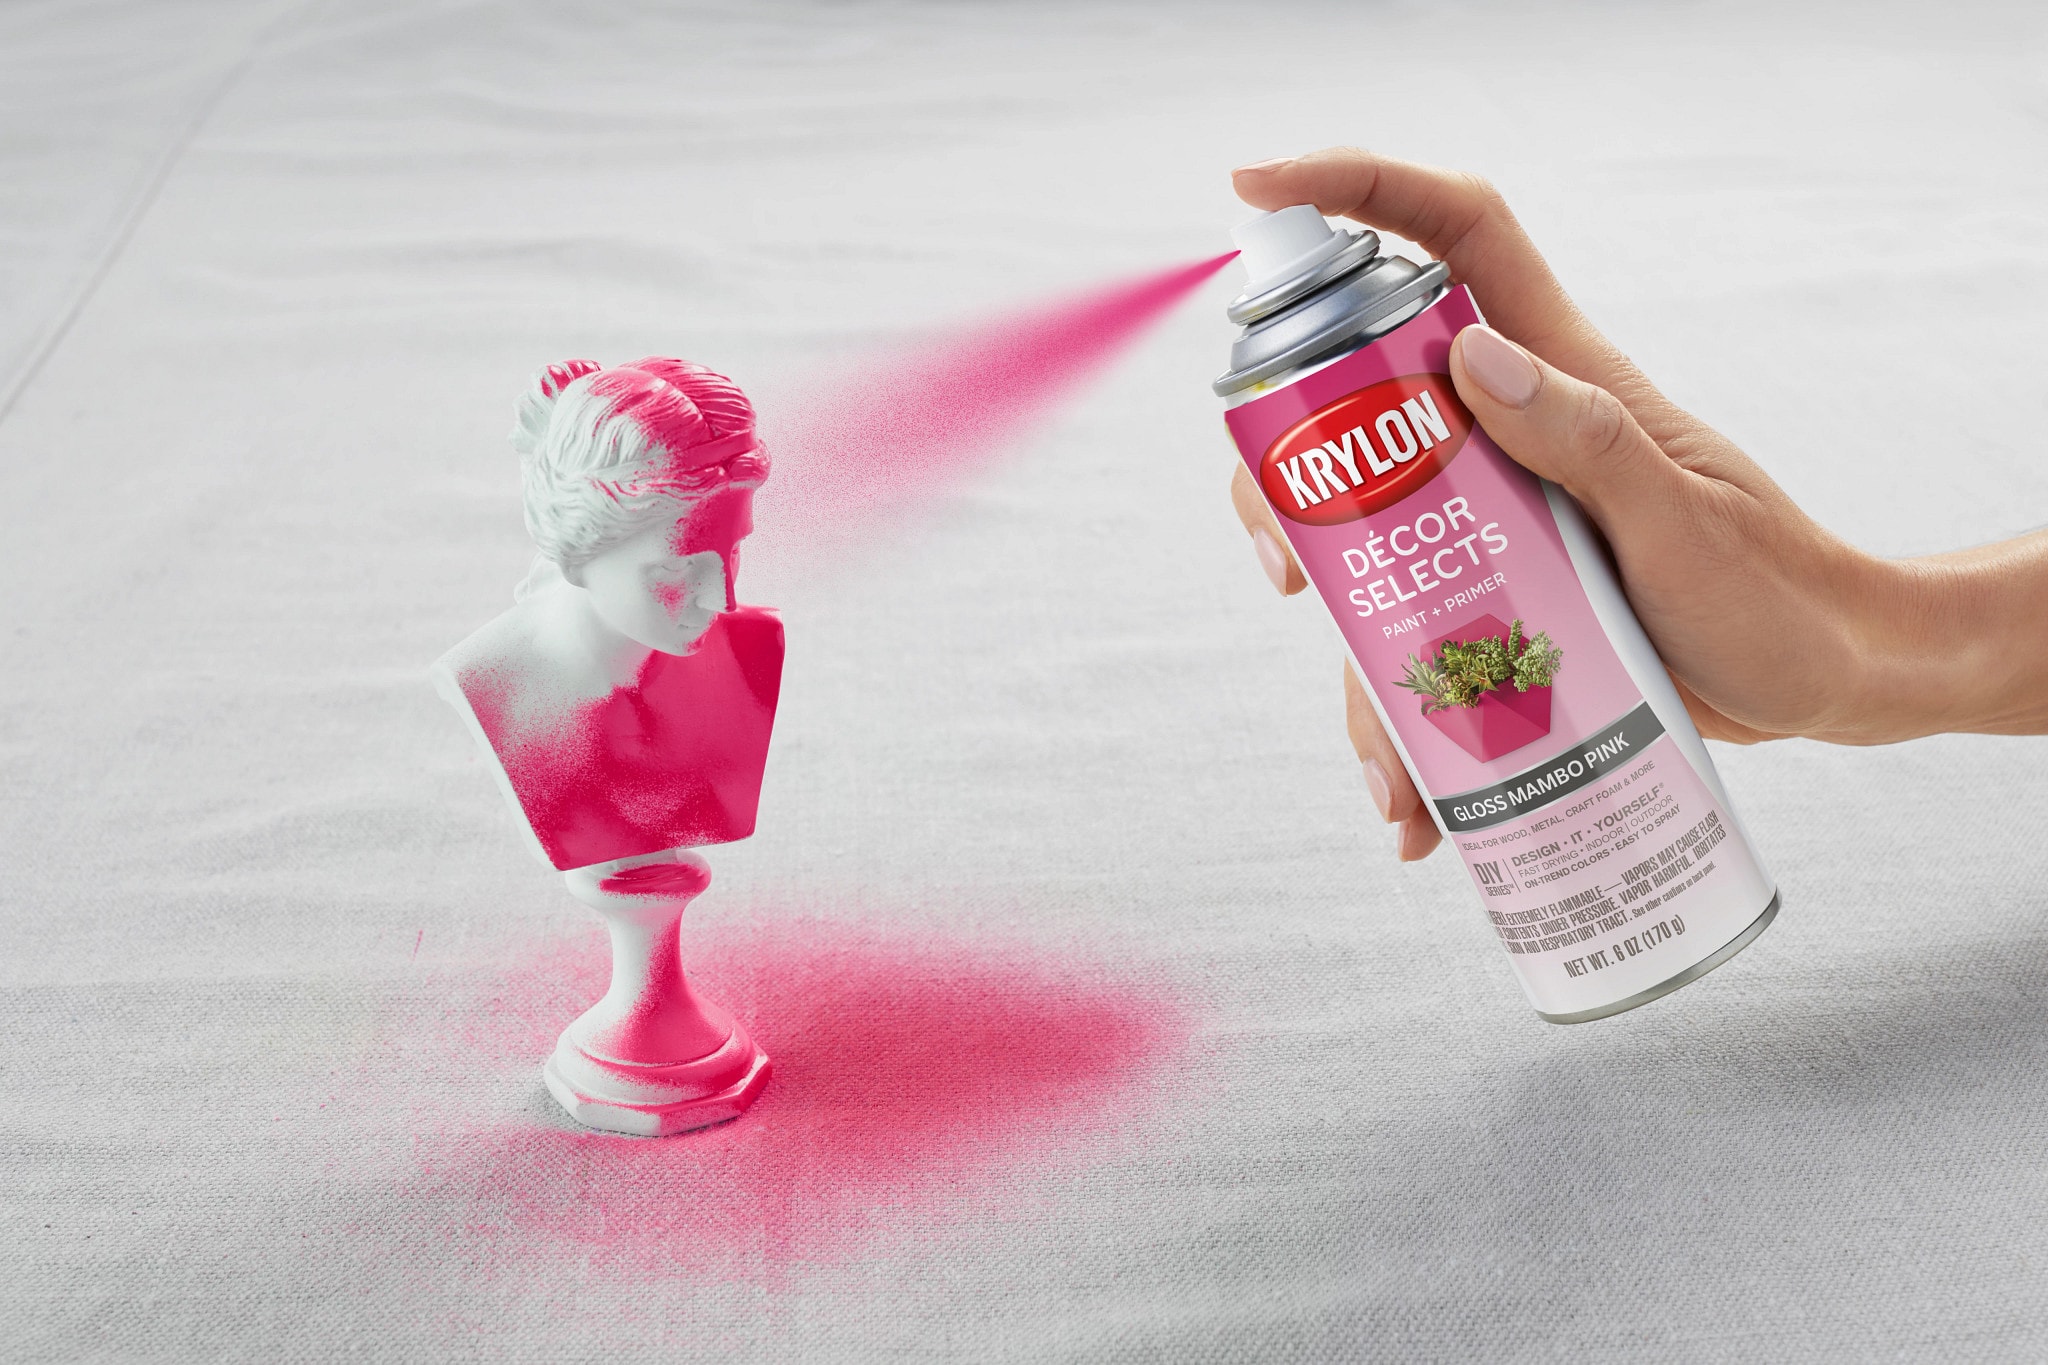 Krylon 427080007 Spray Paint, Gloss, Hot Pink, 12 oz, Can